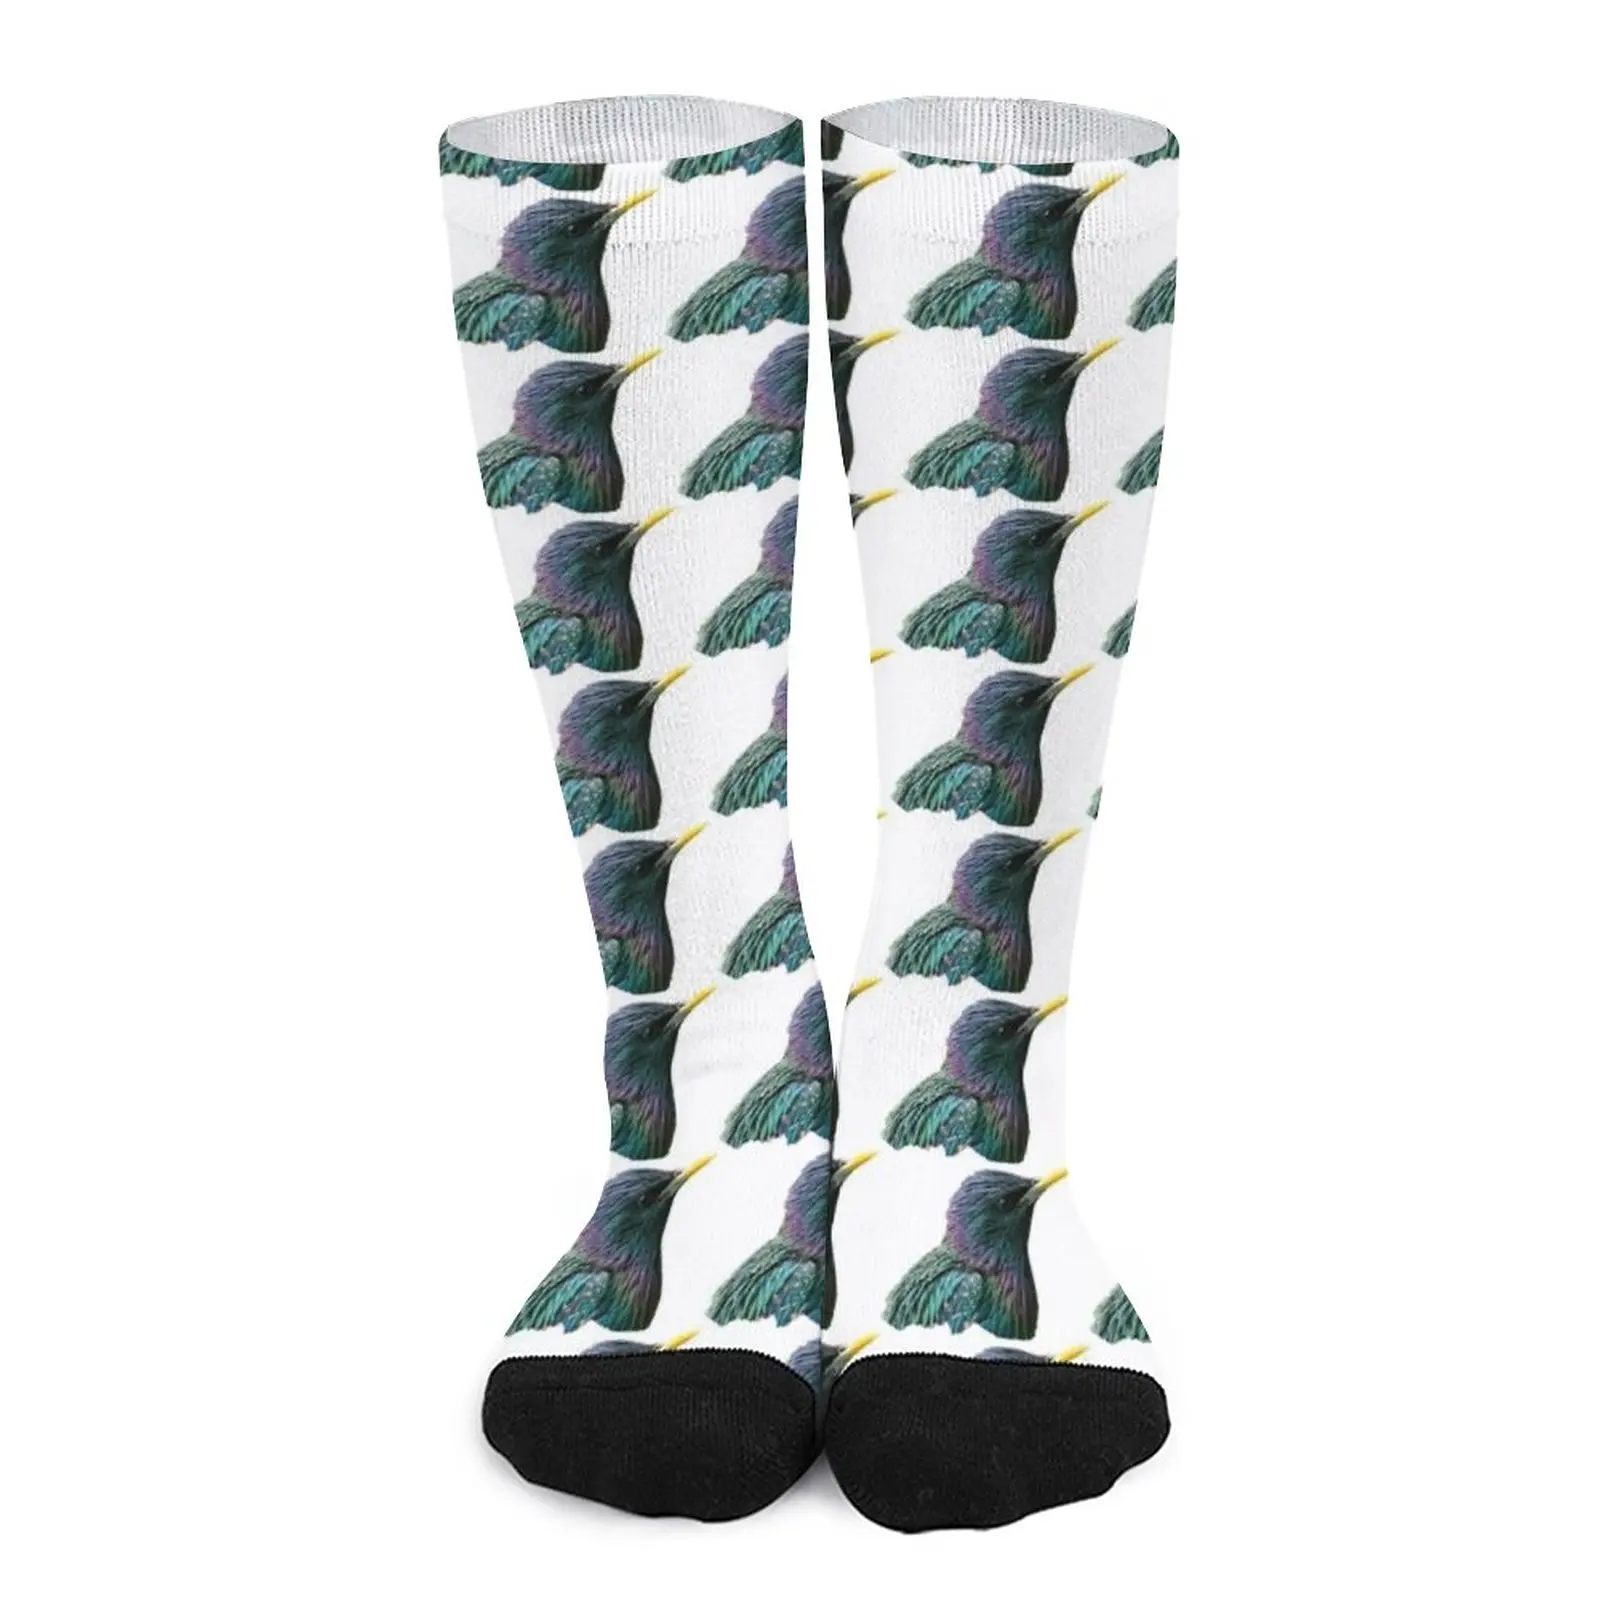 My Starling Socks Women socks ankle socks bernie sanders inauguration fashion mittens socks anime ankle men s socks luxury women s